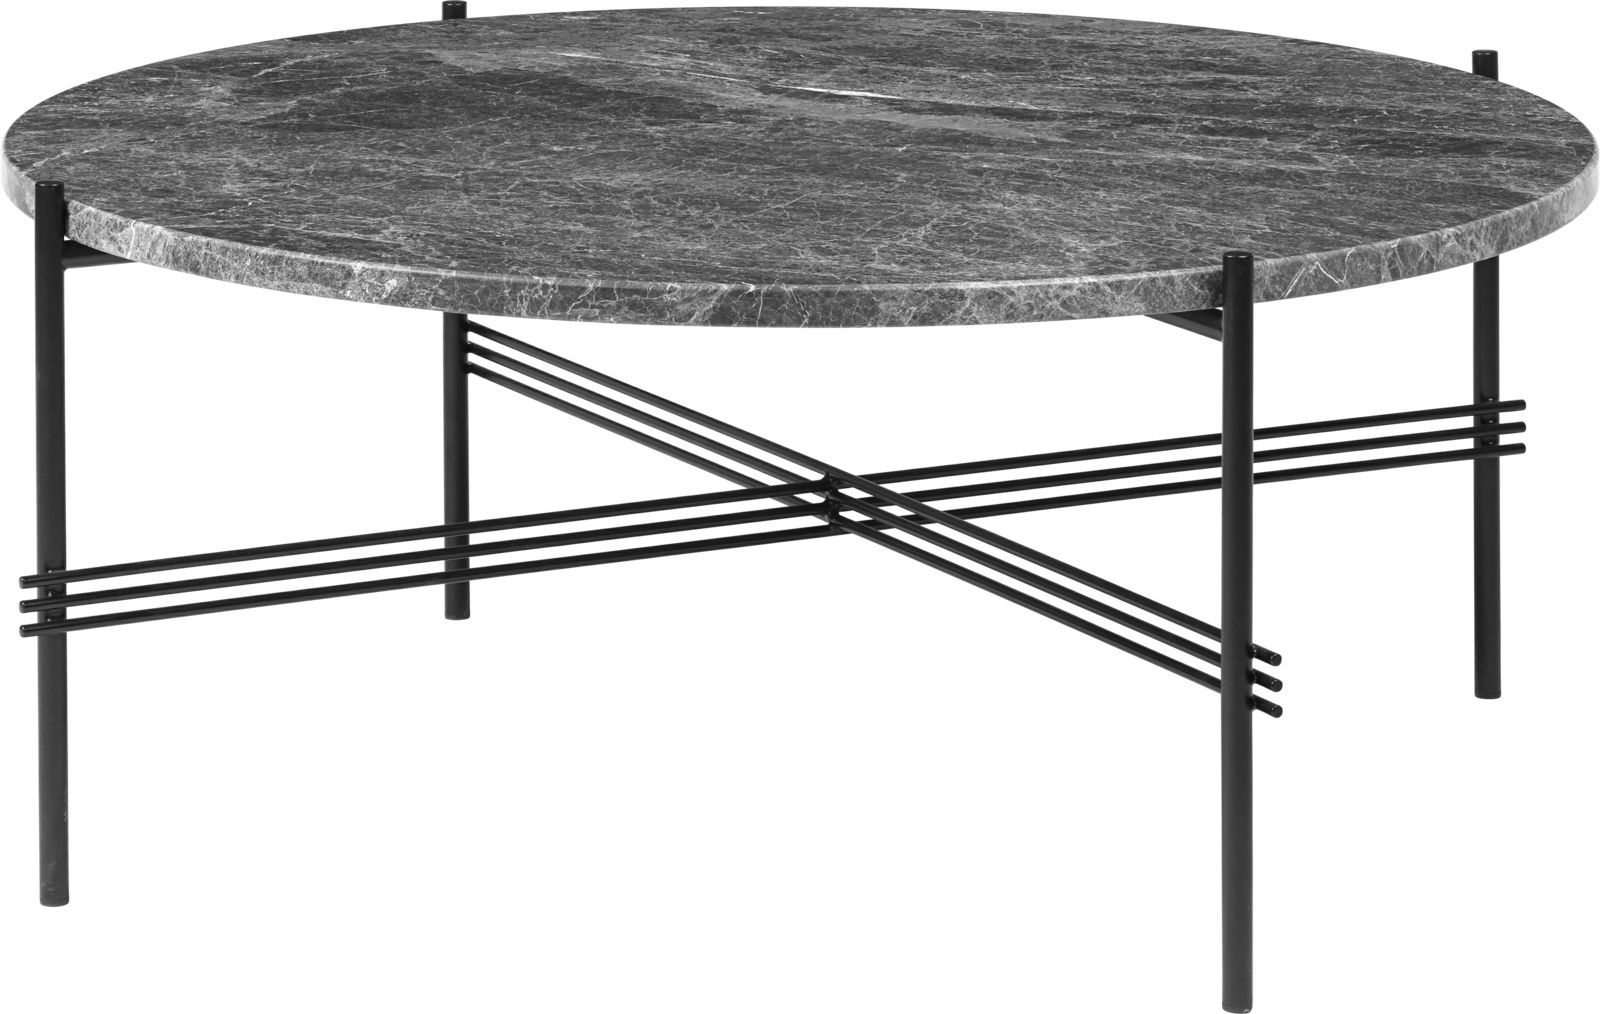 Gubi TS Coffee Table - Round, 80cm